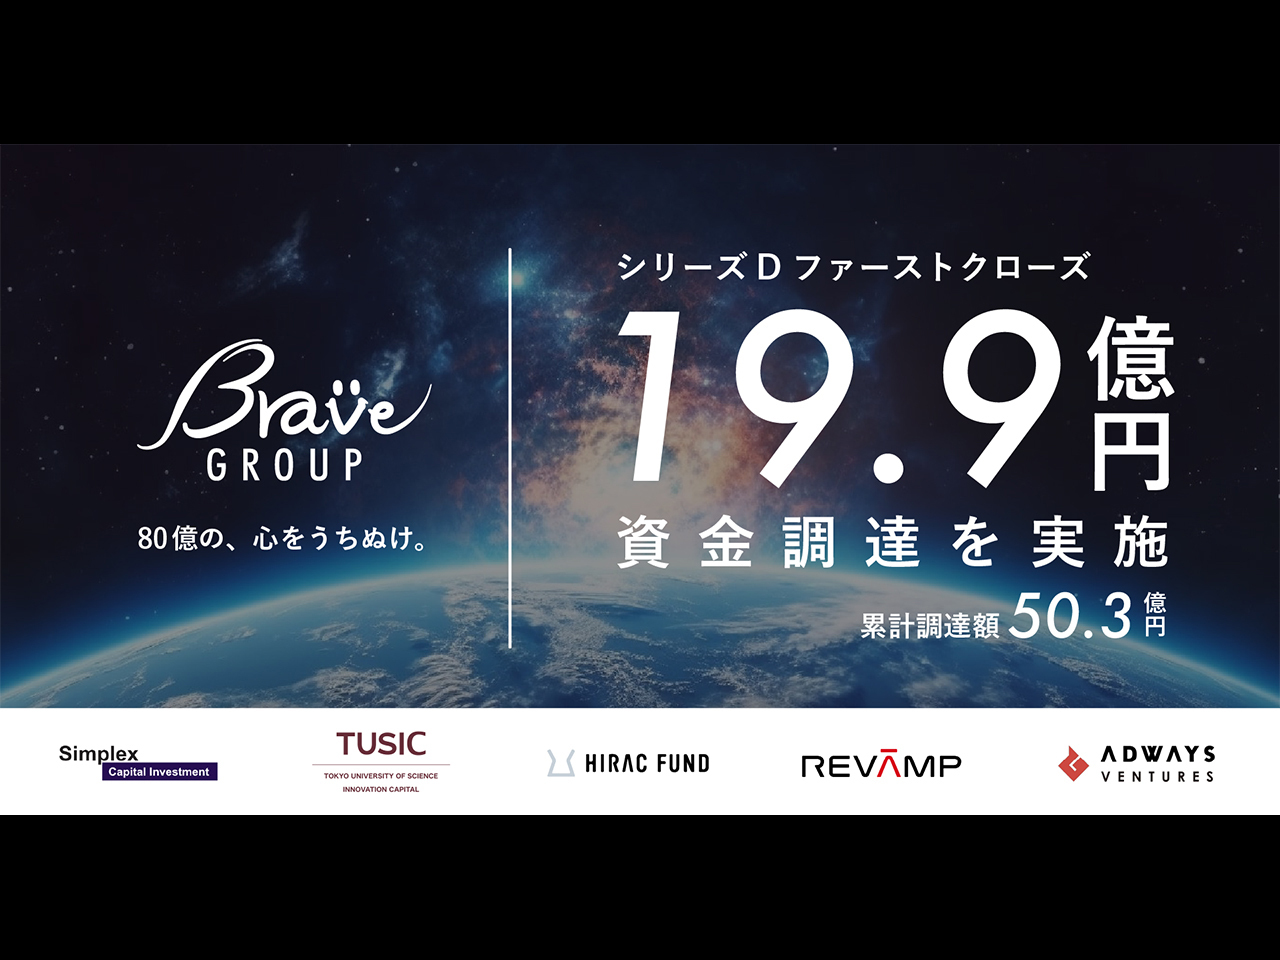 VTuberなどを展開するBrave group、19.9億円の資金調達--グローバル展開をさらに促進